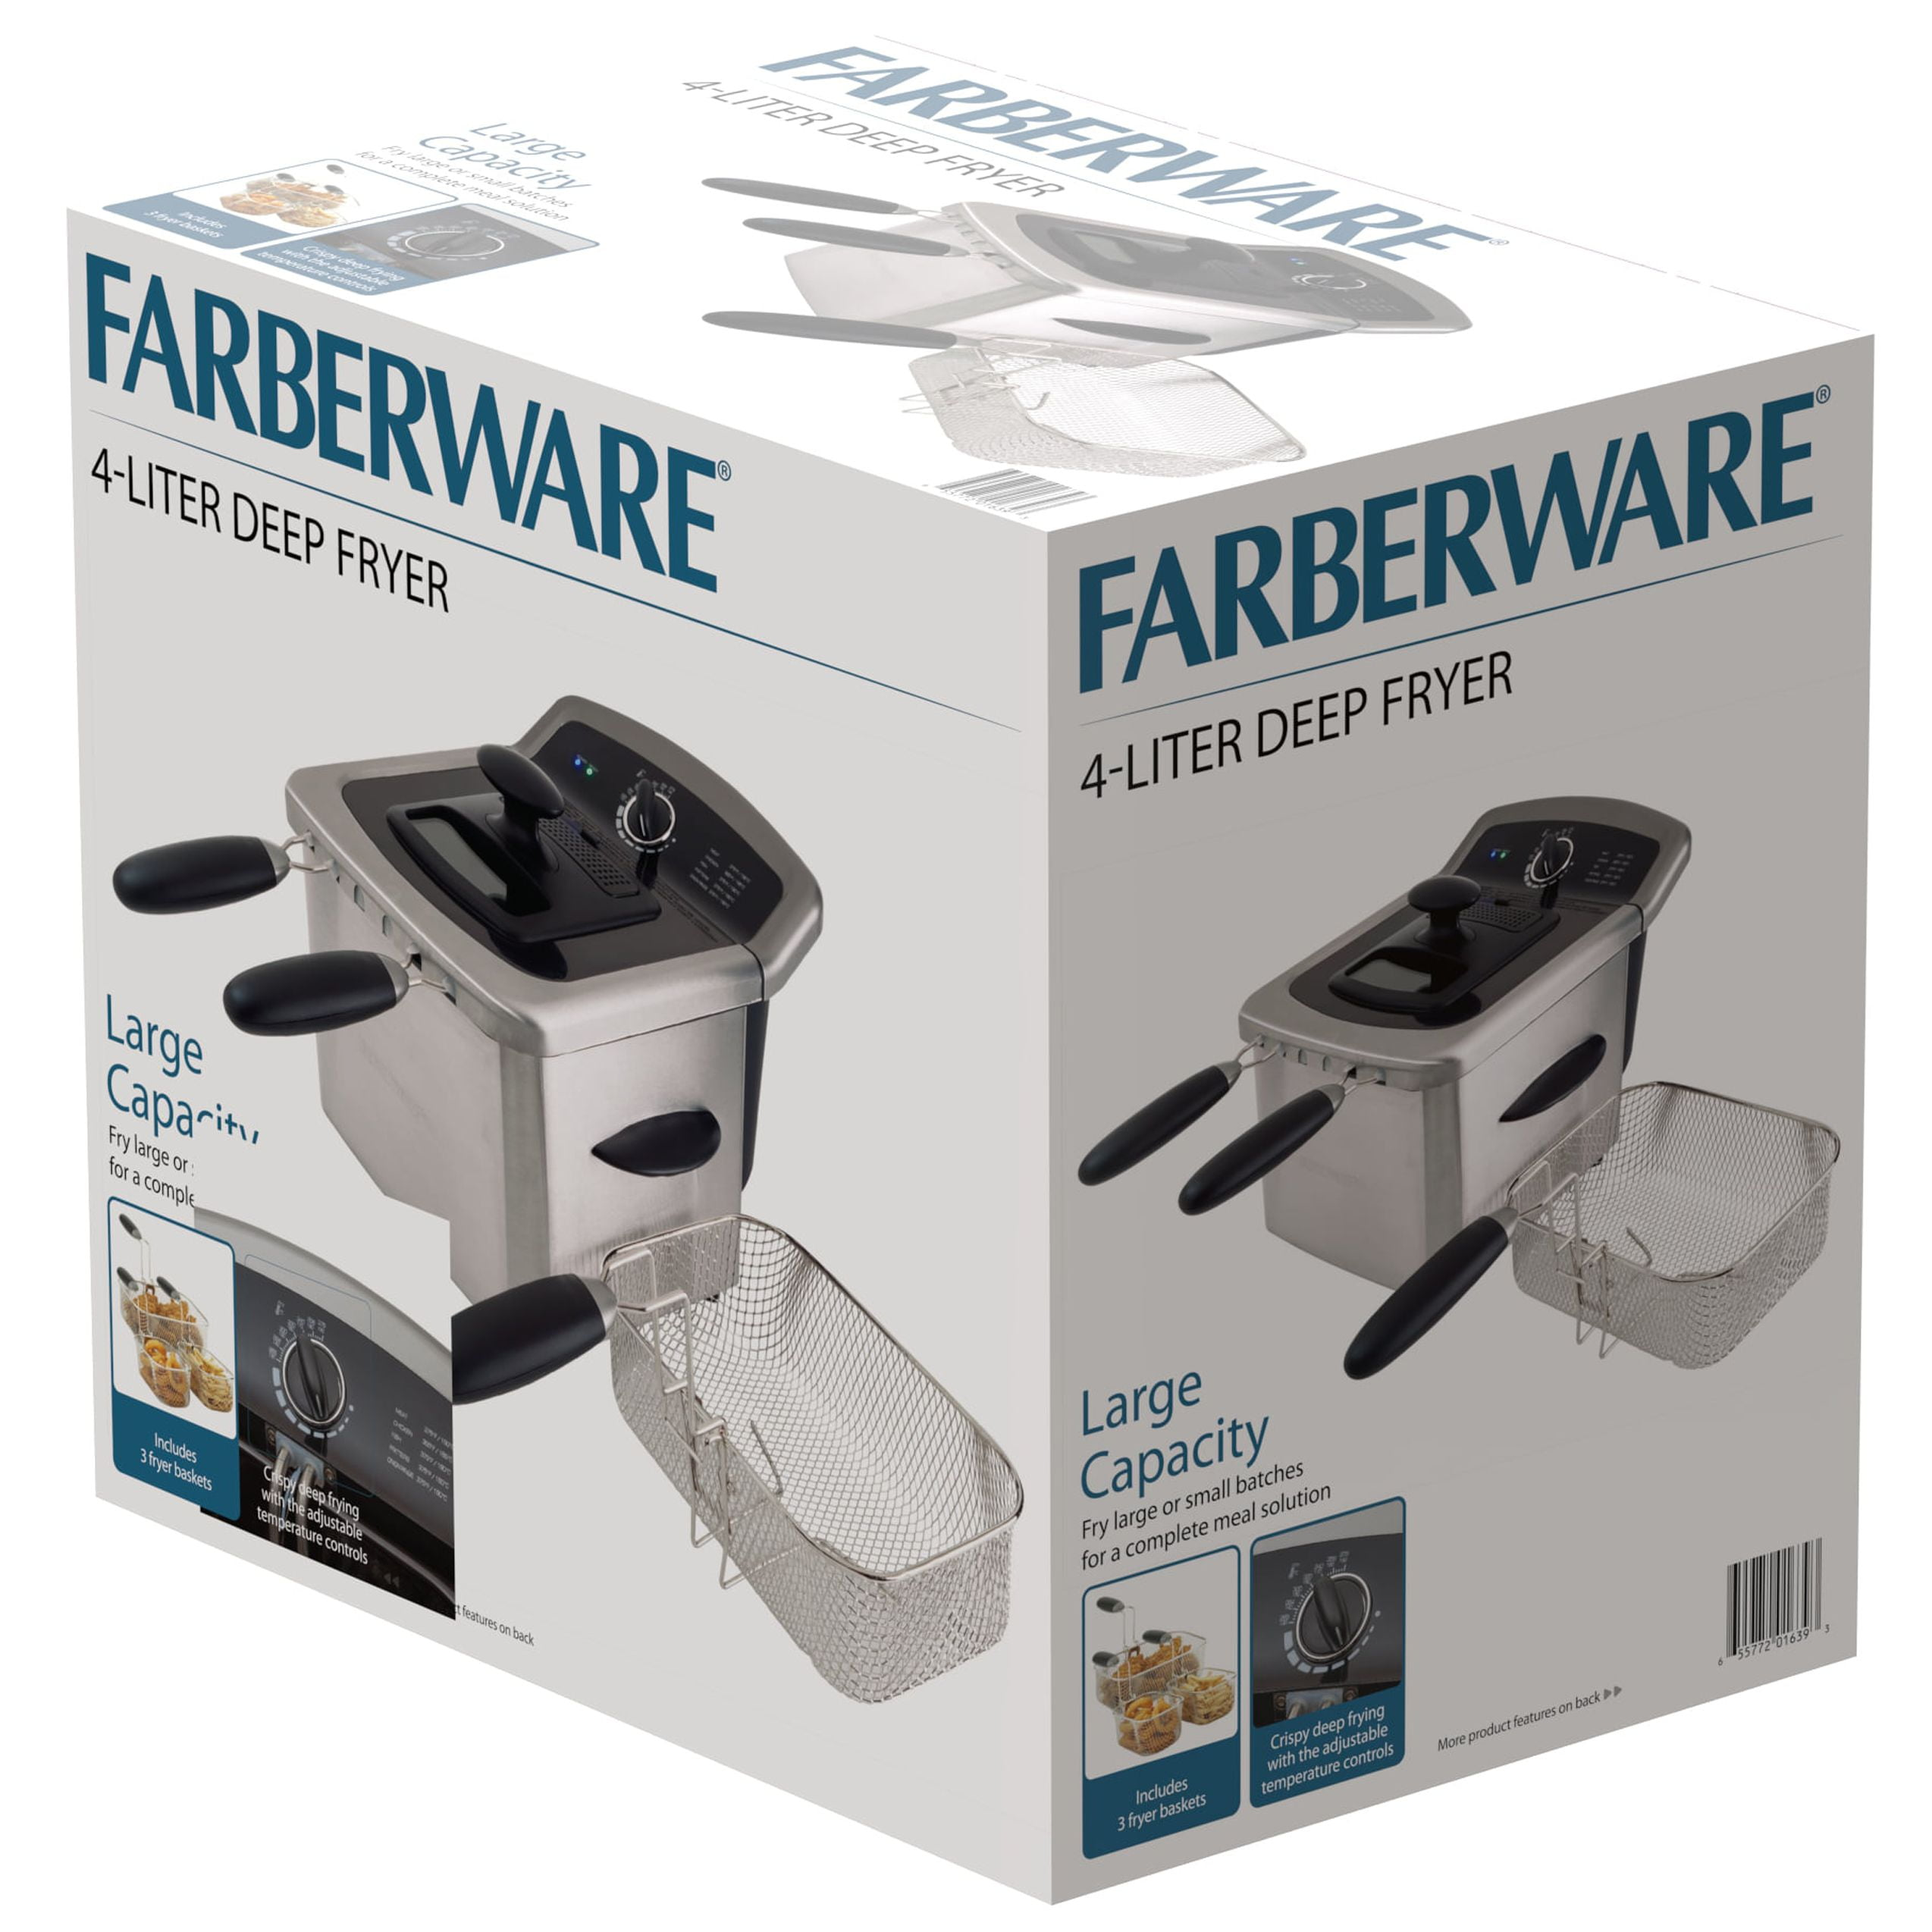 Farberware 4L Deep Fryer, Stainless Steel, Electric, New, Model 201639 - image 11 of 11